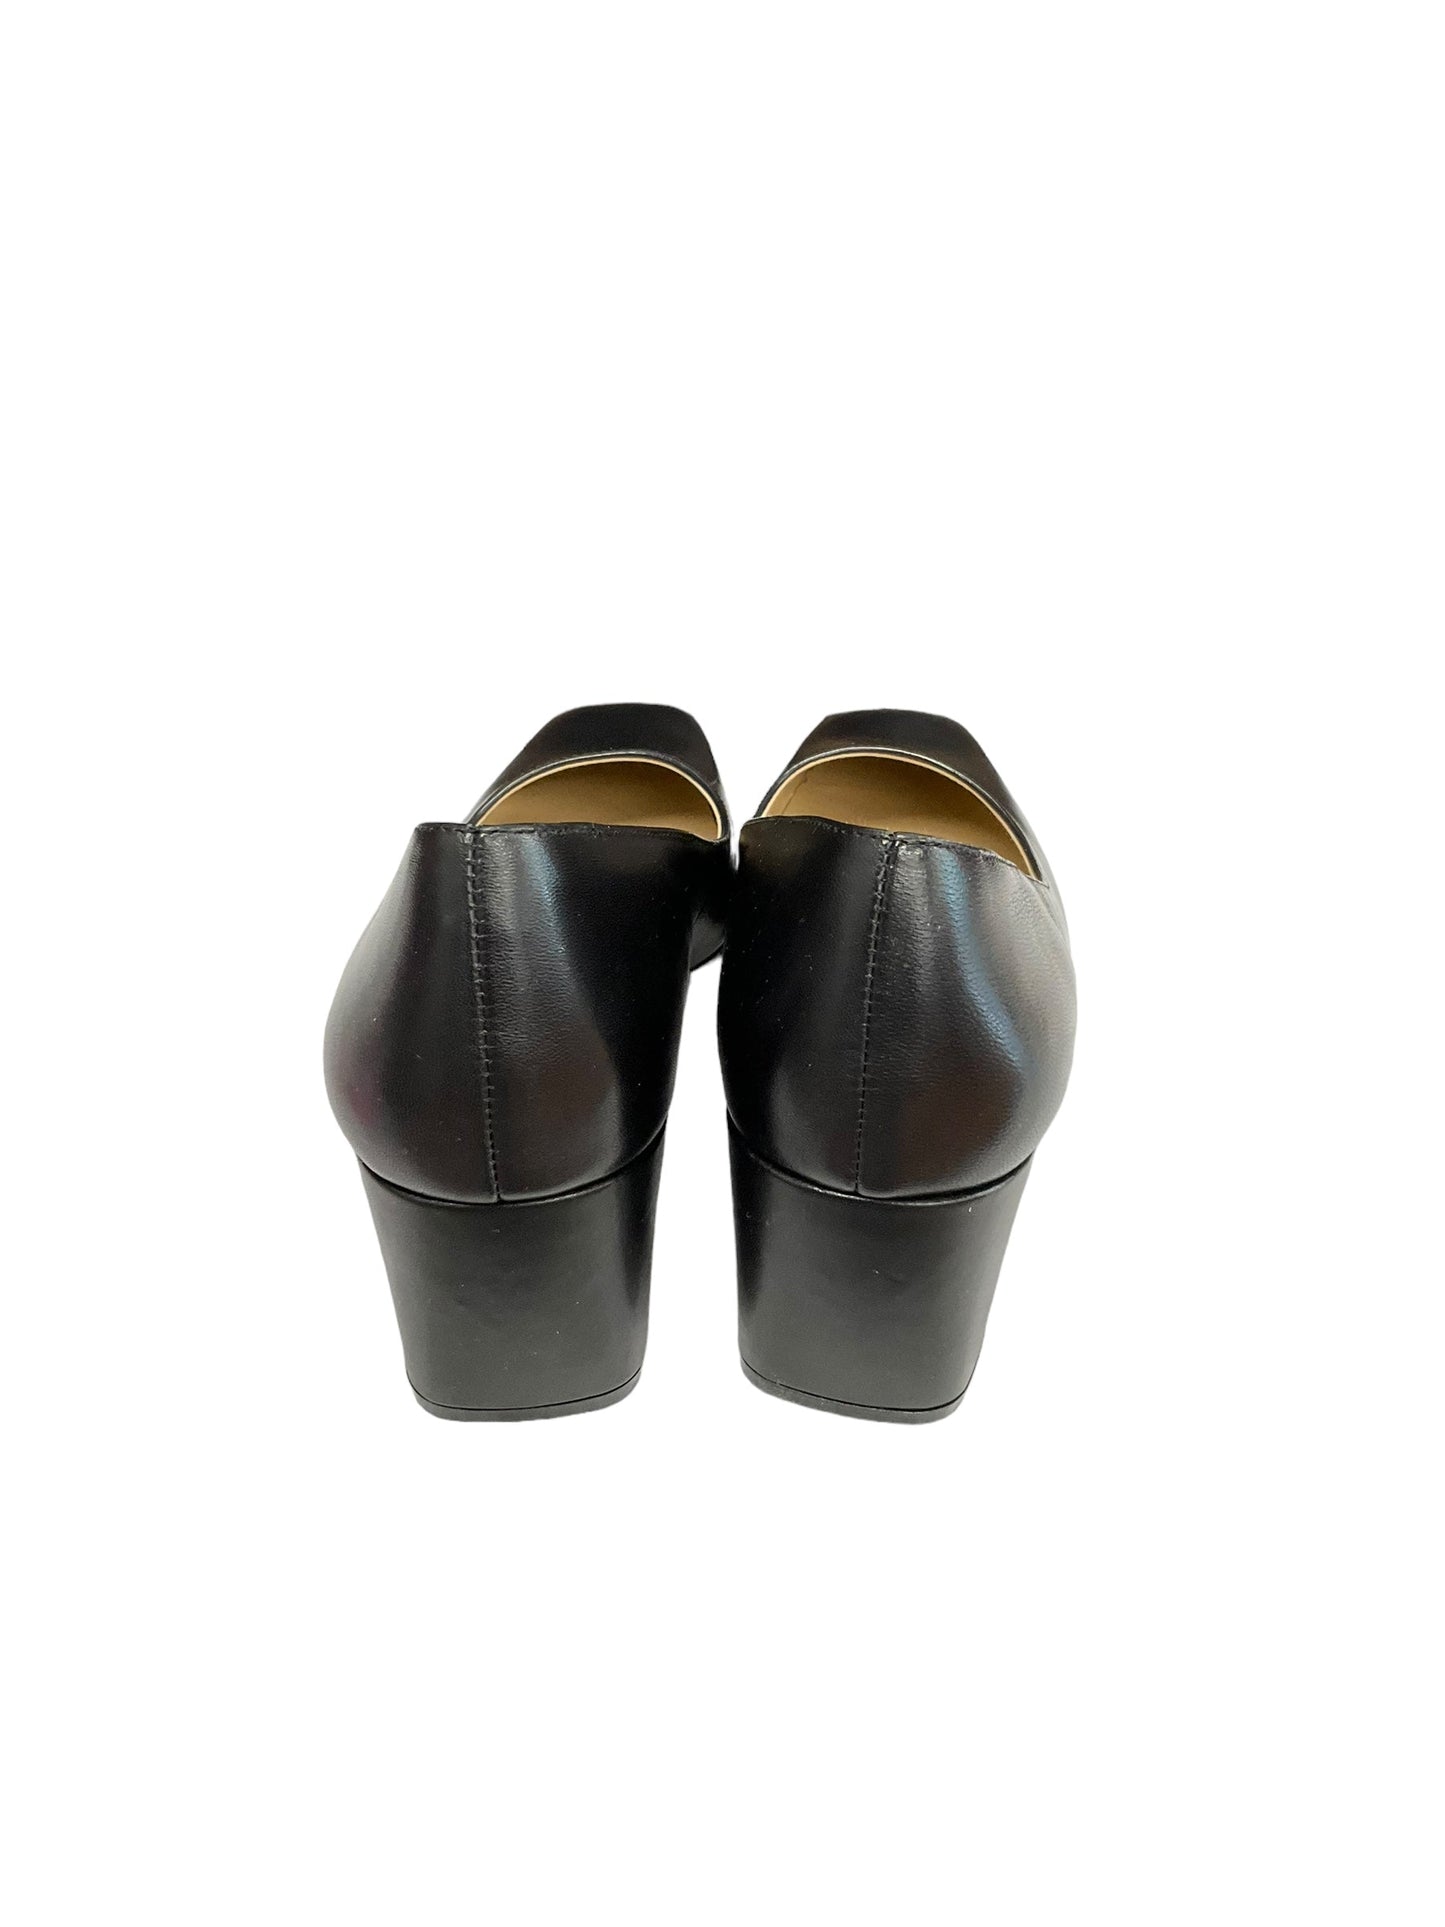 Black Shoes Heels Block Naturalizer, Size 11